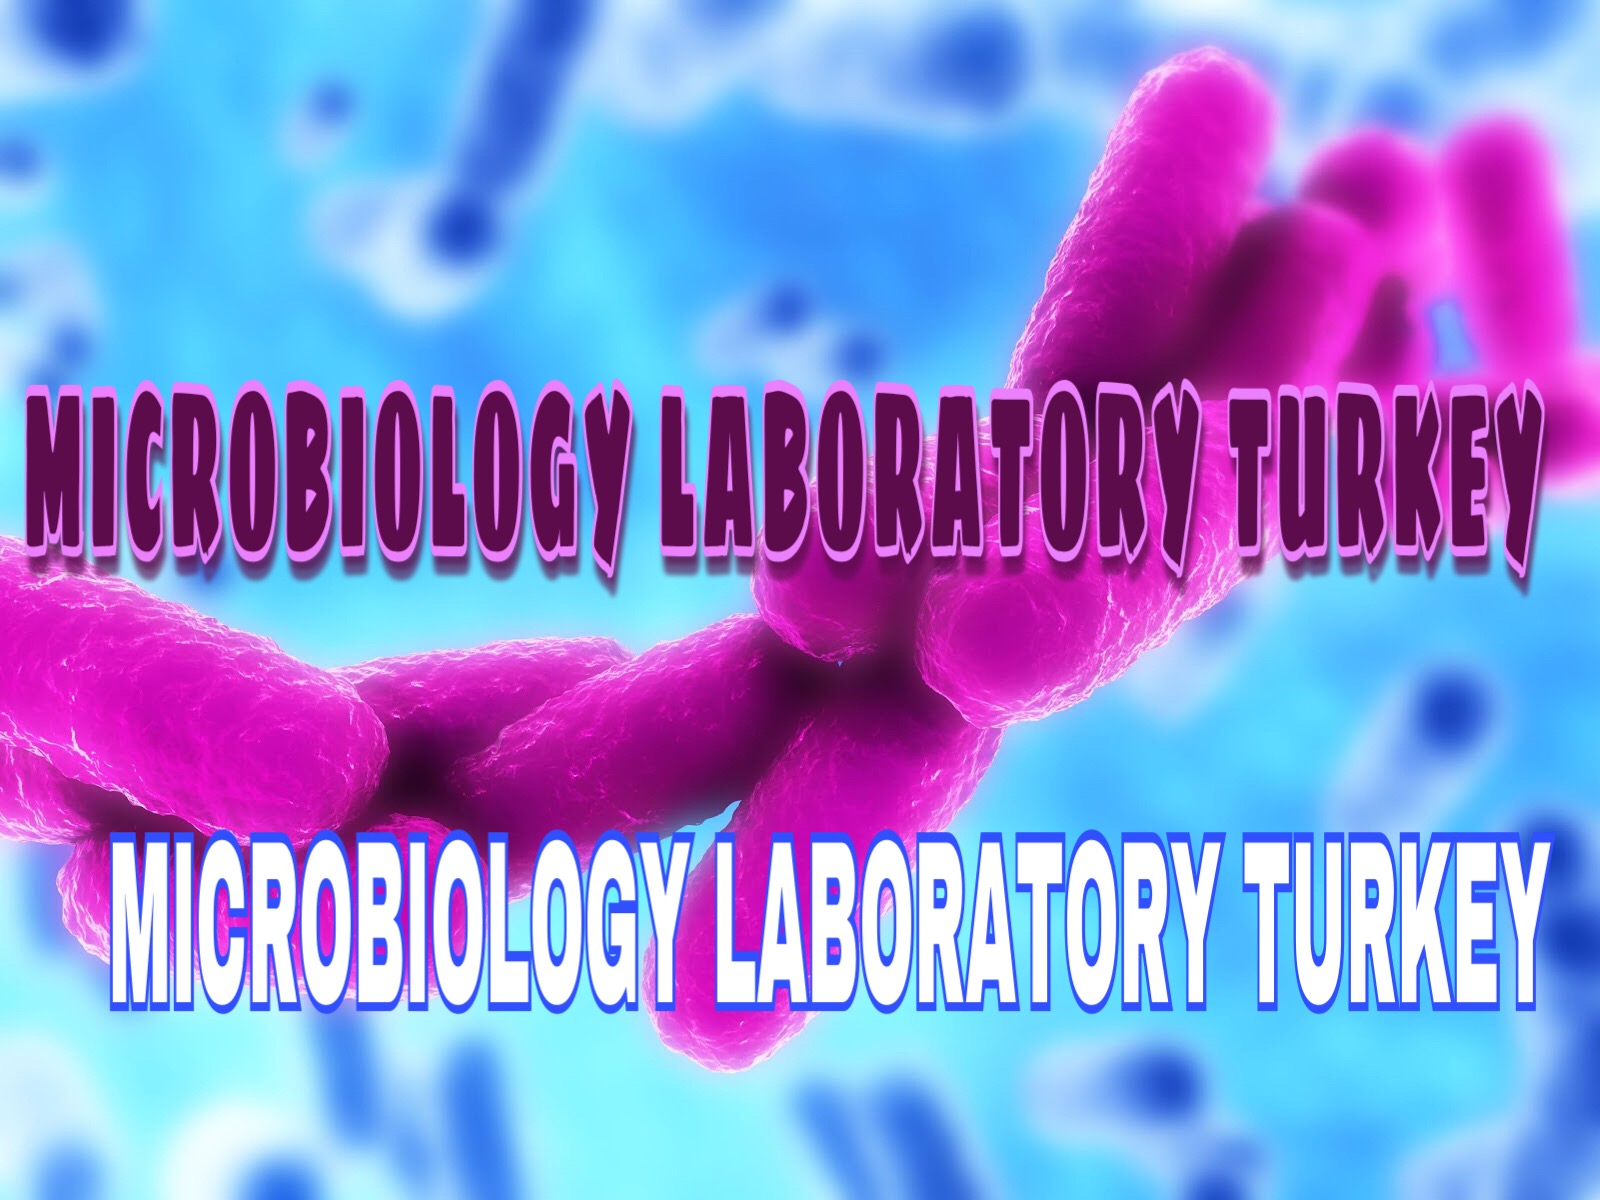 Microbiology Laboratory Turkey